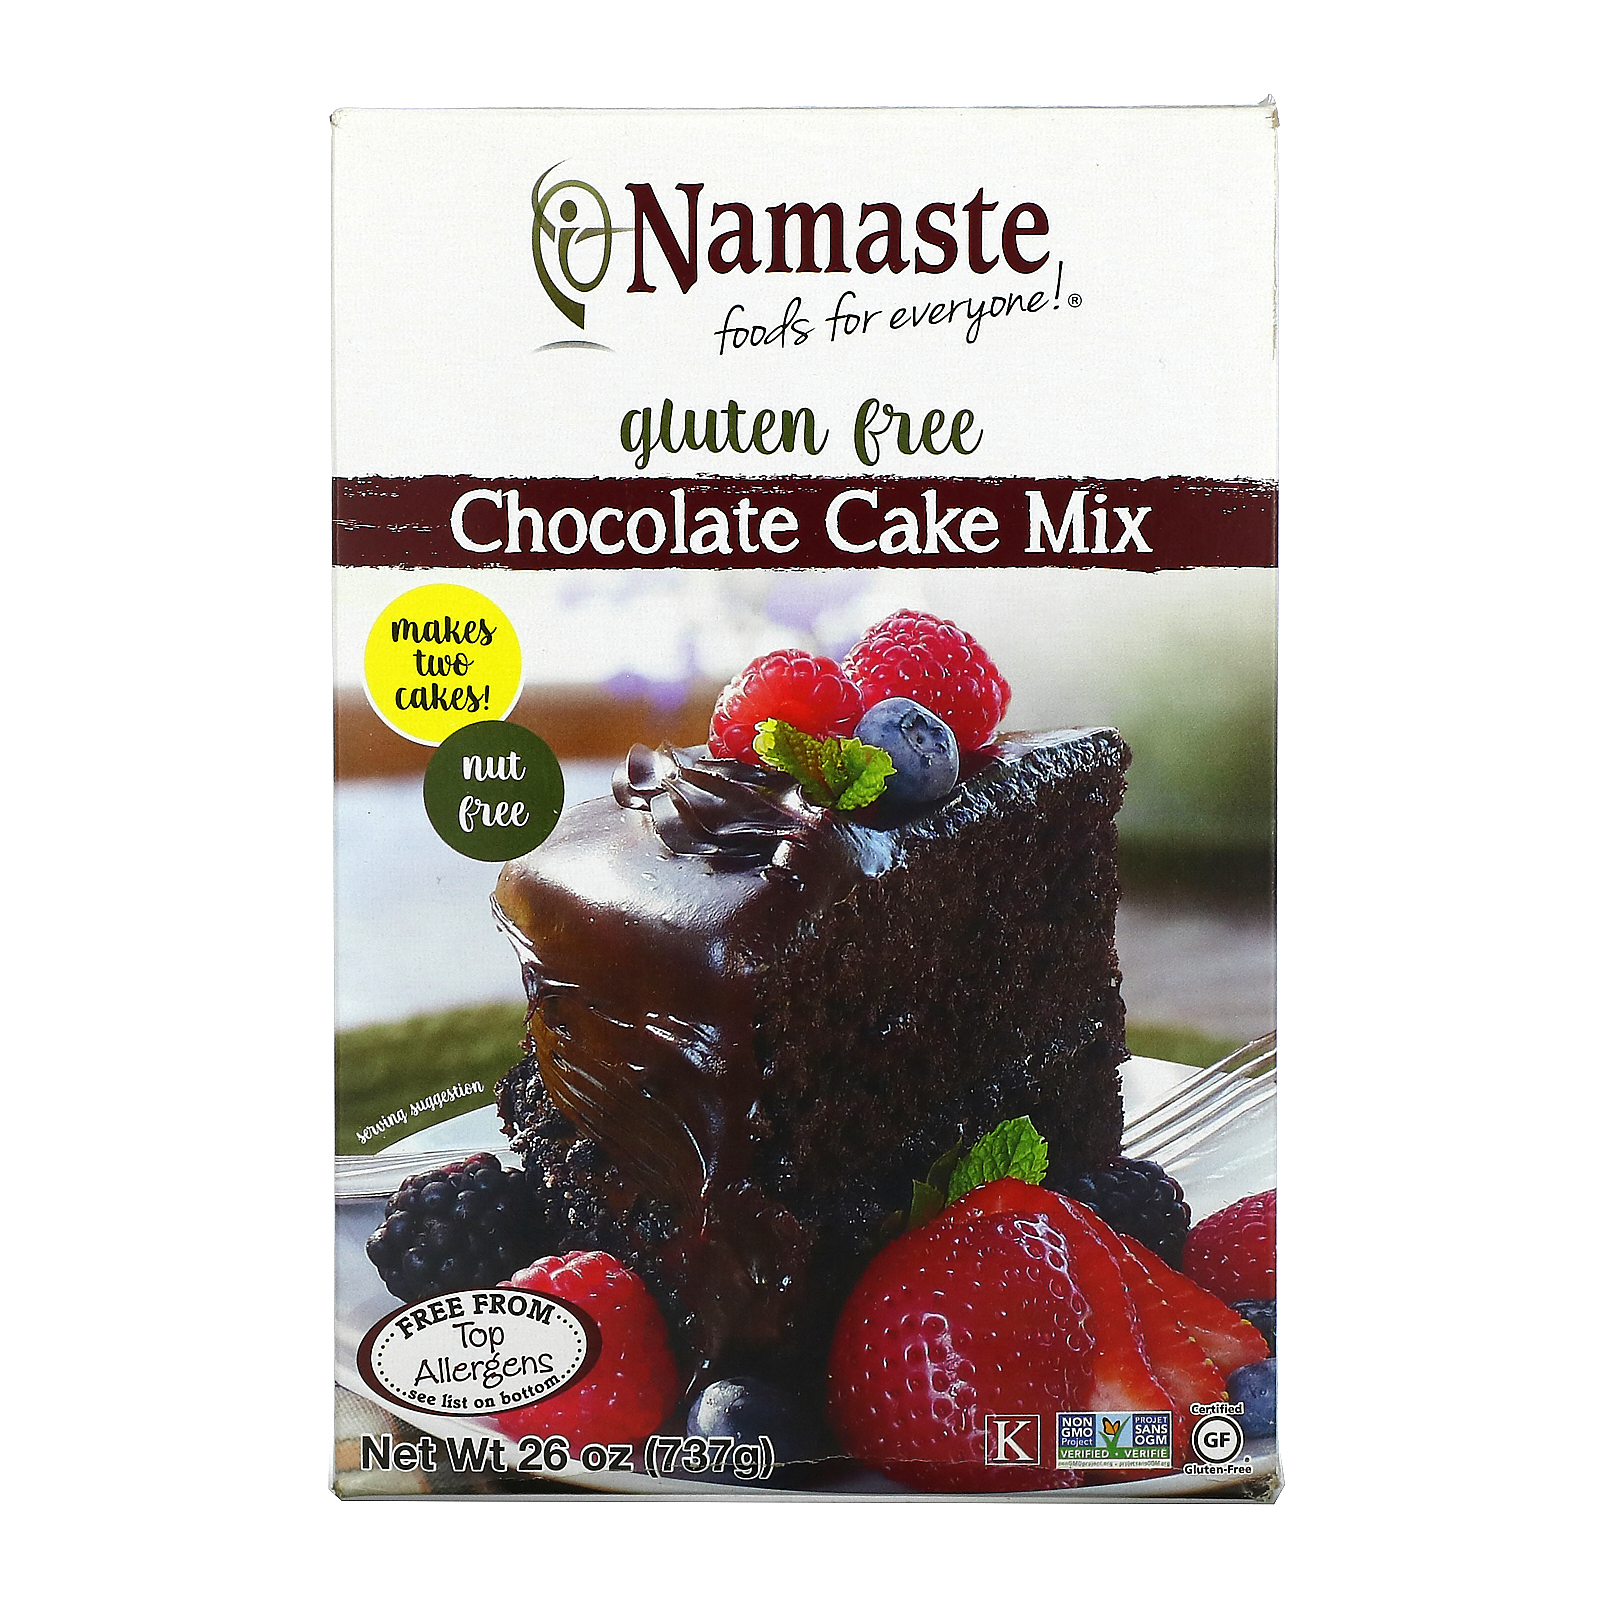 Namaste Foods, Chocolate Cake Mix, Gluten Free, 26 oz (737 g)